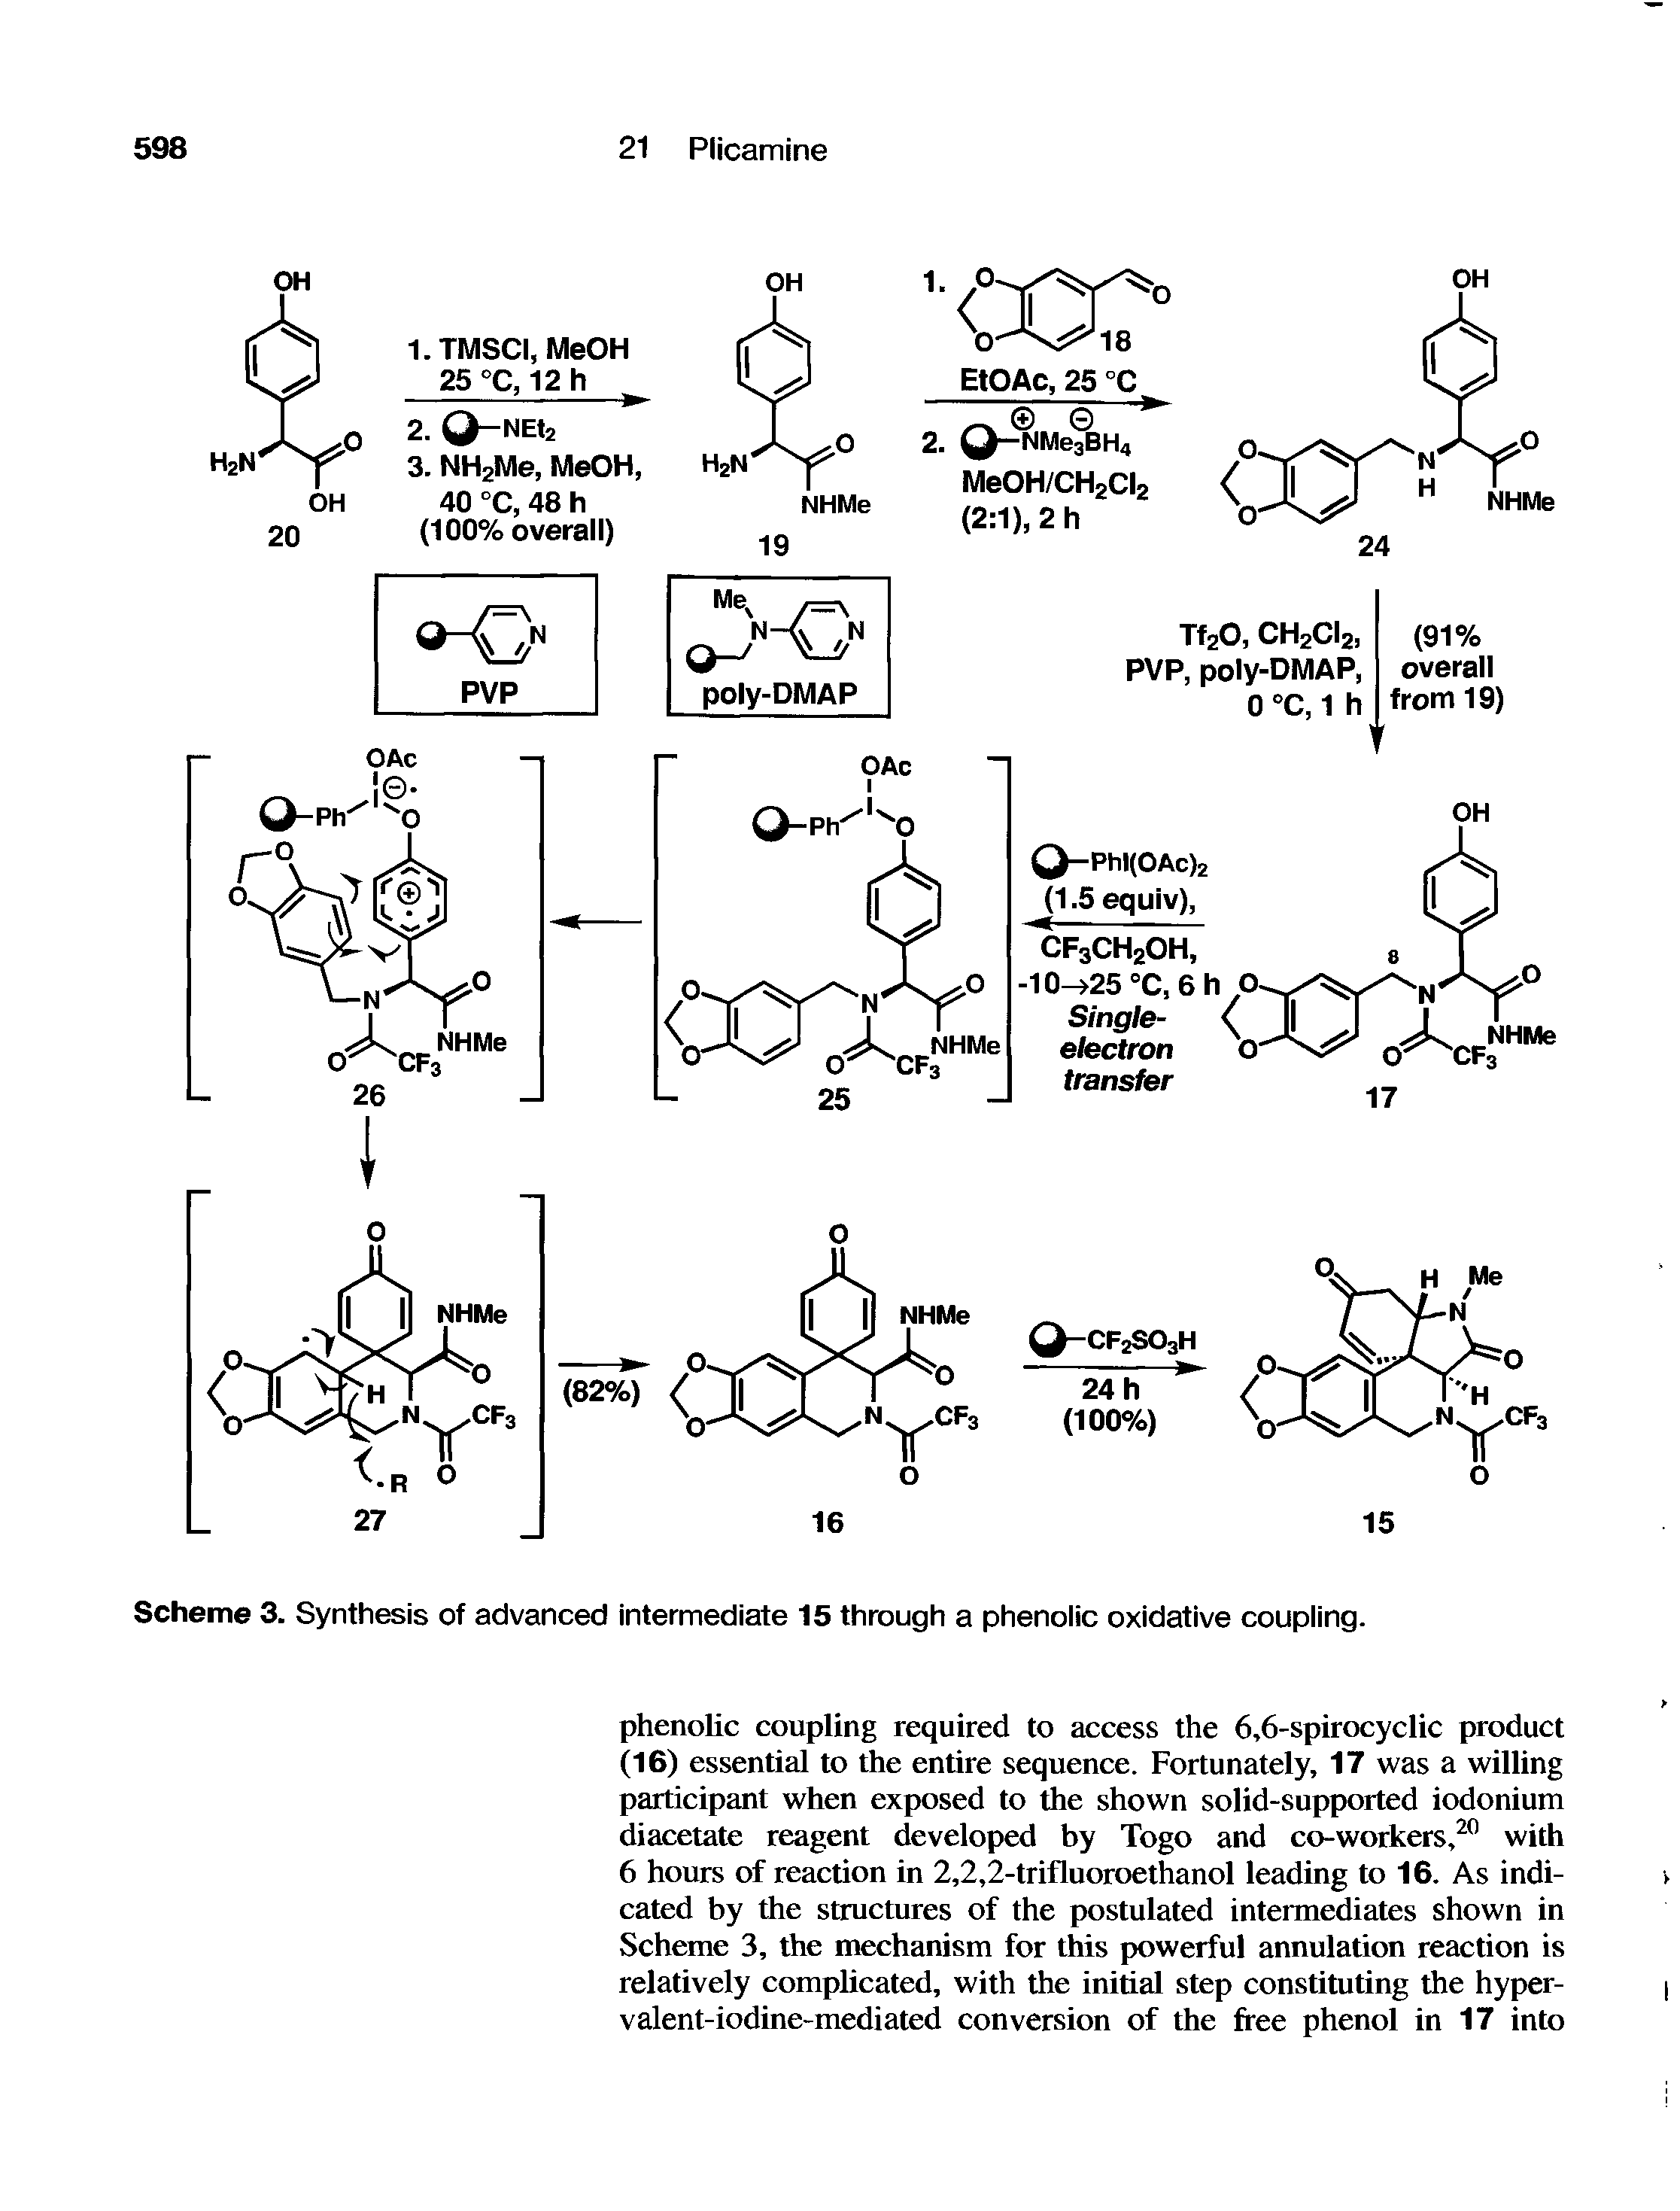 Scheme 3. Synthesis of advanced intermediate 15 through a phenolic oxidative coupling.